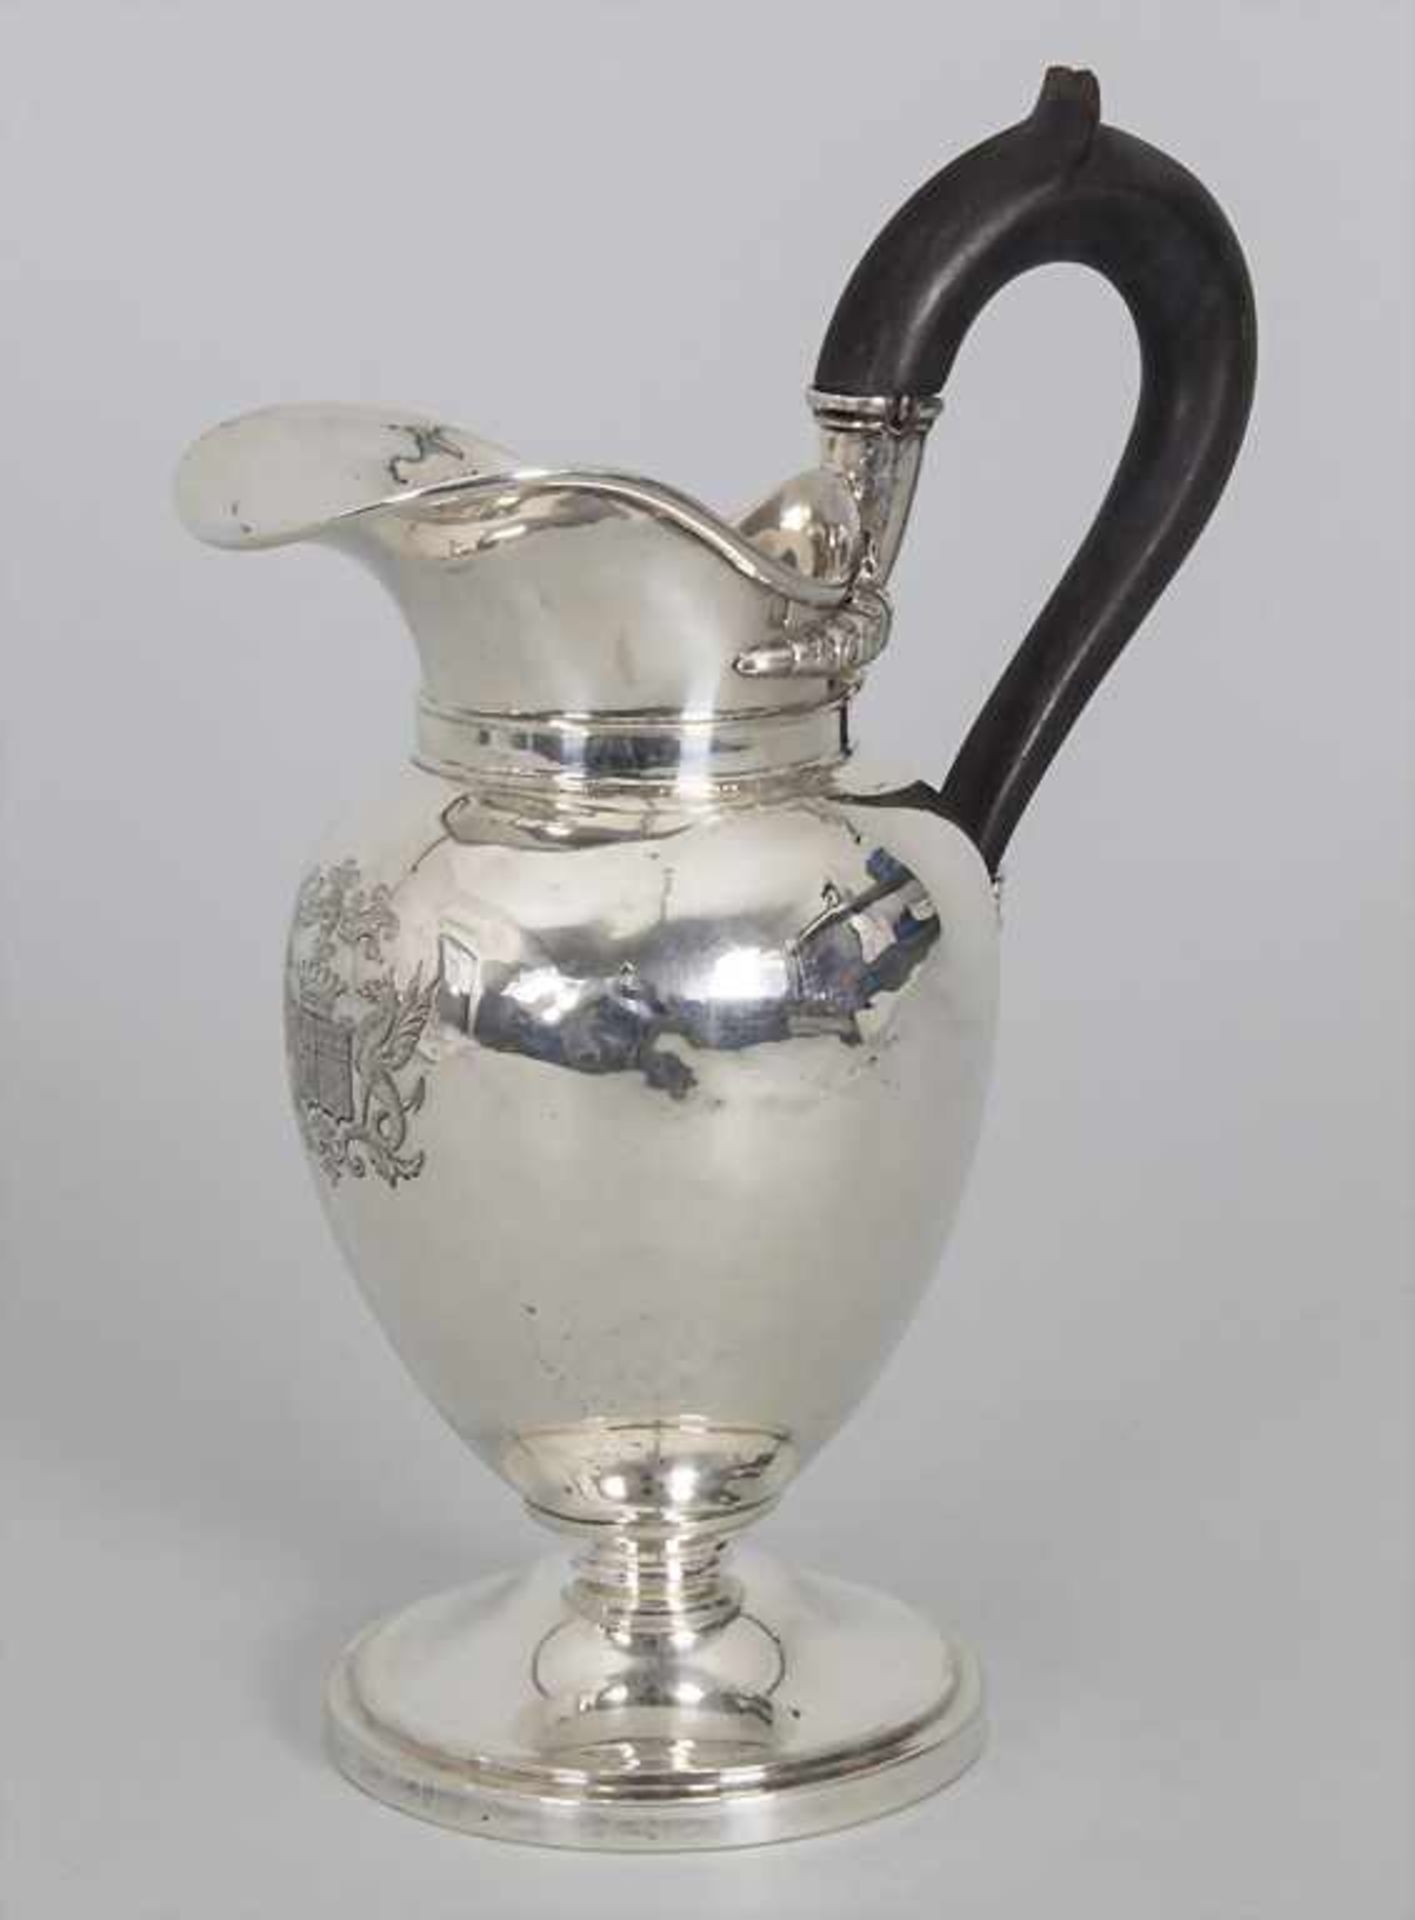 Empire Silber Weinkrug mit Adelswappen / A silver wine jug with coat of arms / Un pichet à vin en